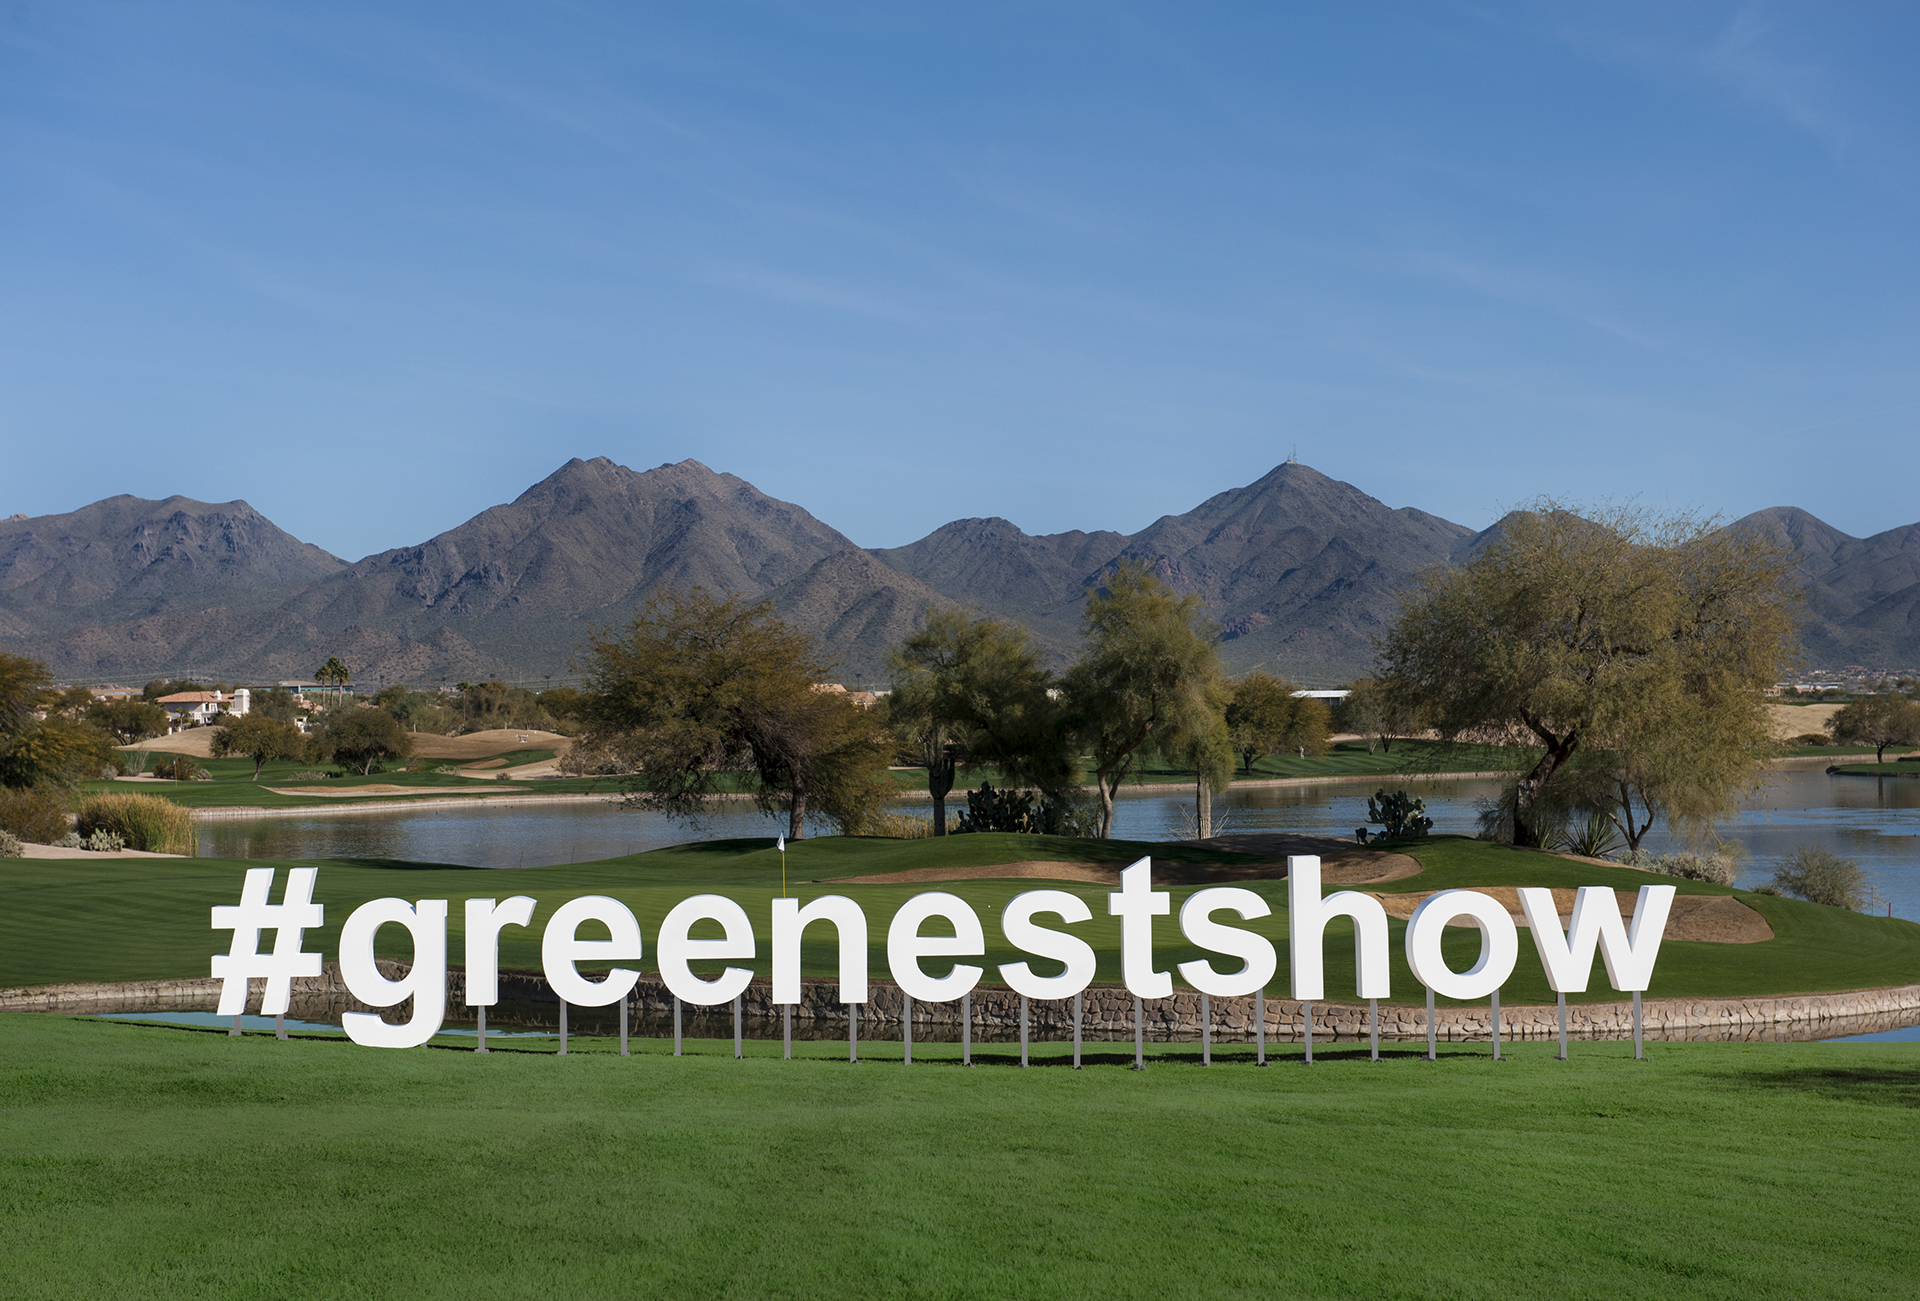 GreenestShow hashtag low-res